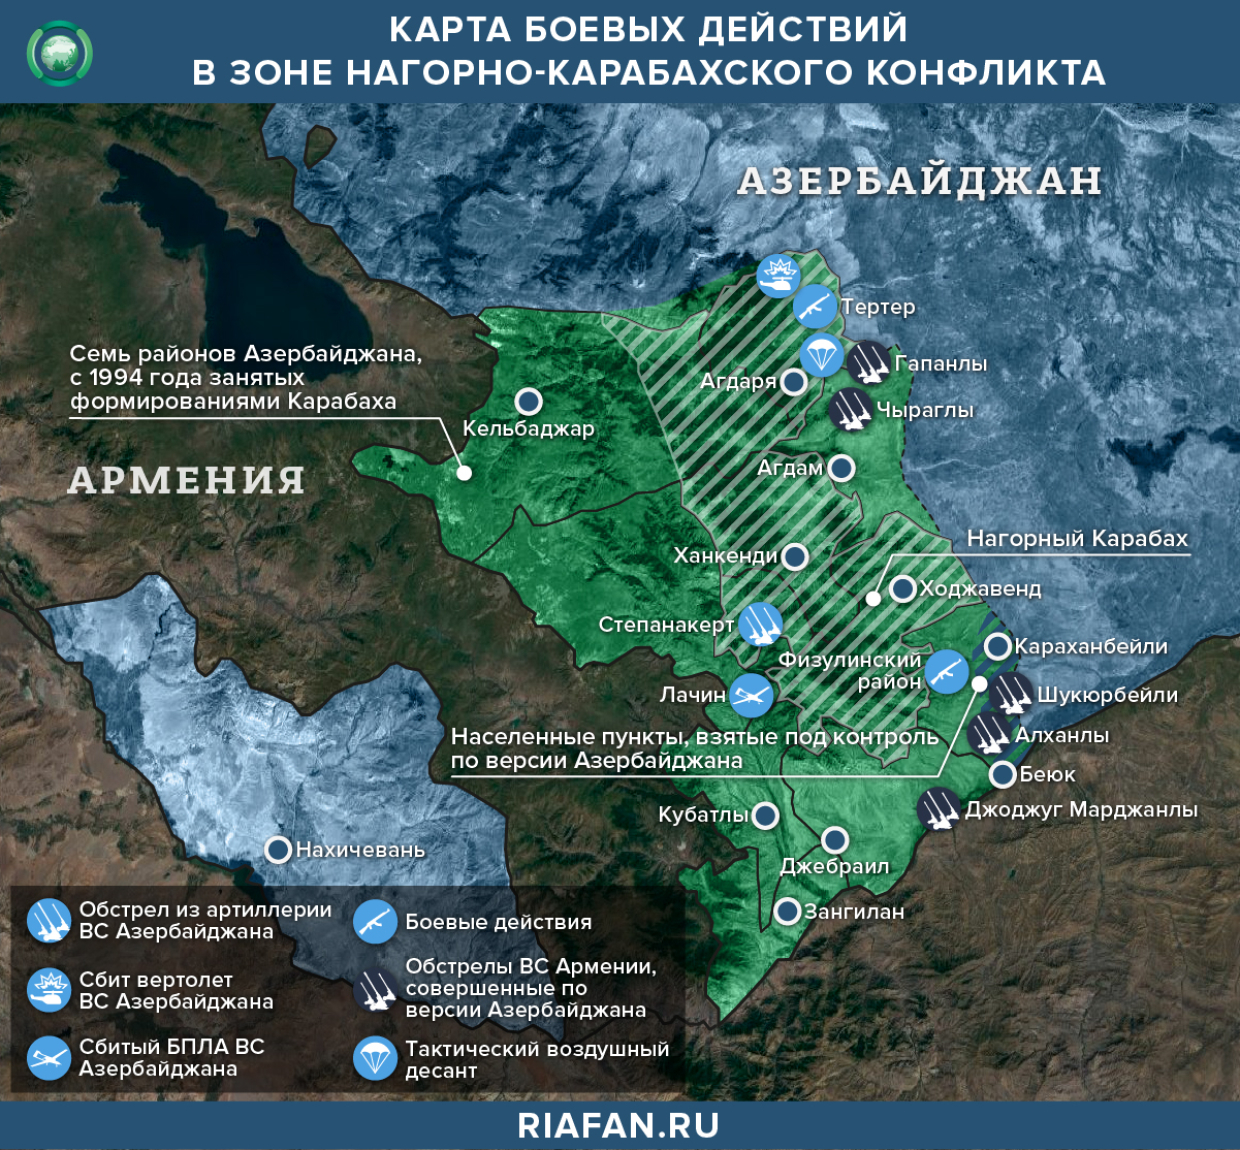 Захарова указала на масштабную активизацию конфликта в Нагорном Карабахе